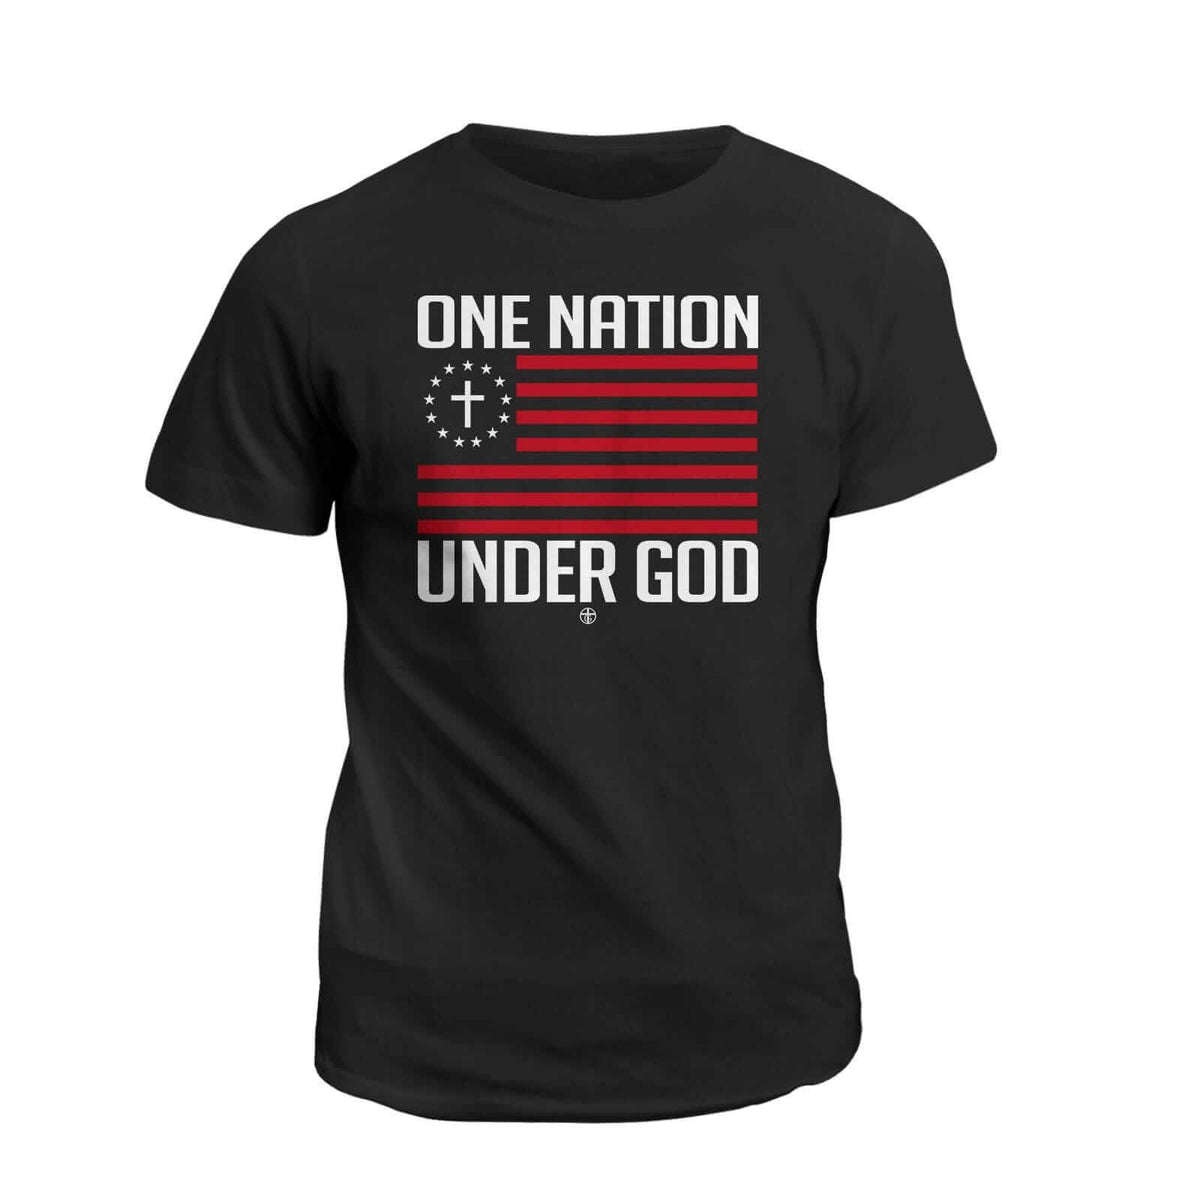 One Nation Under God - Our True God